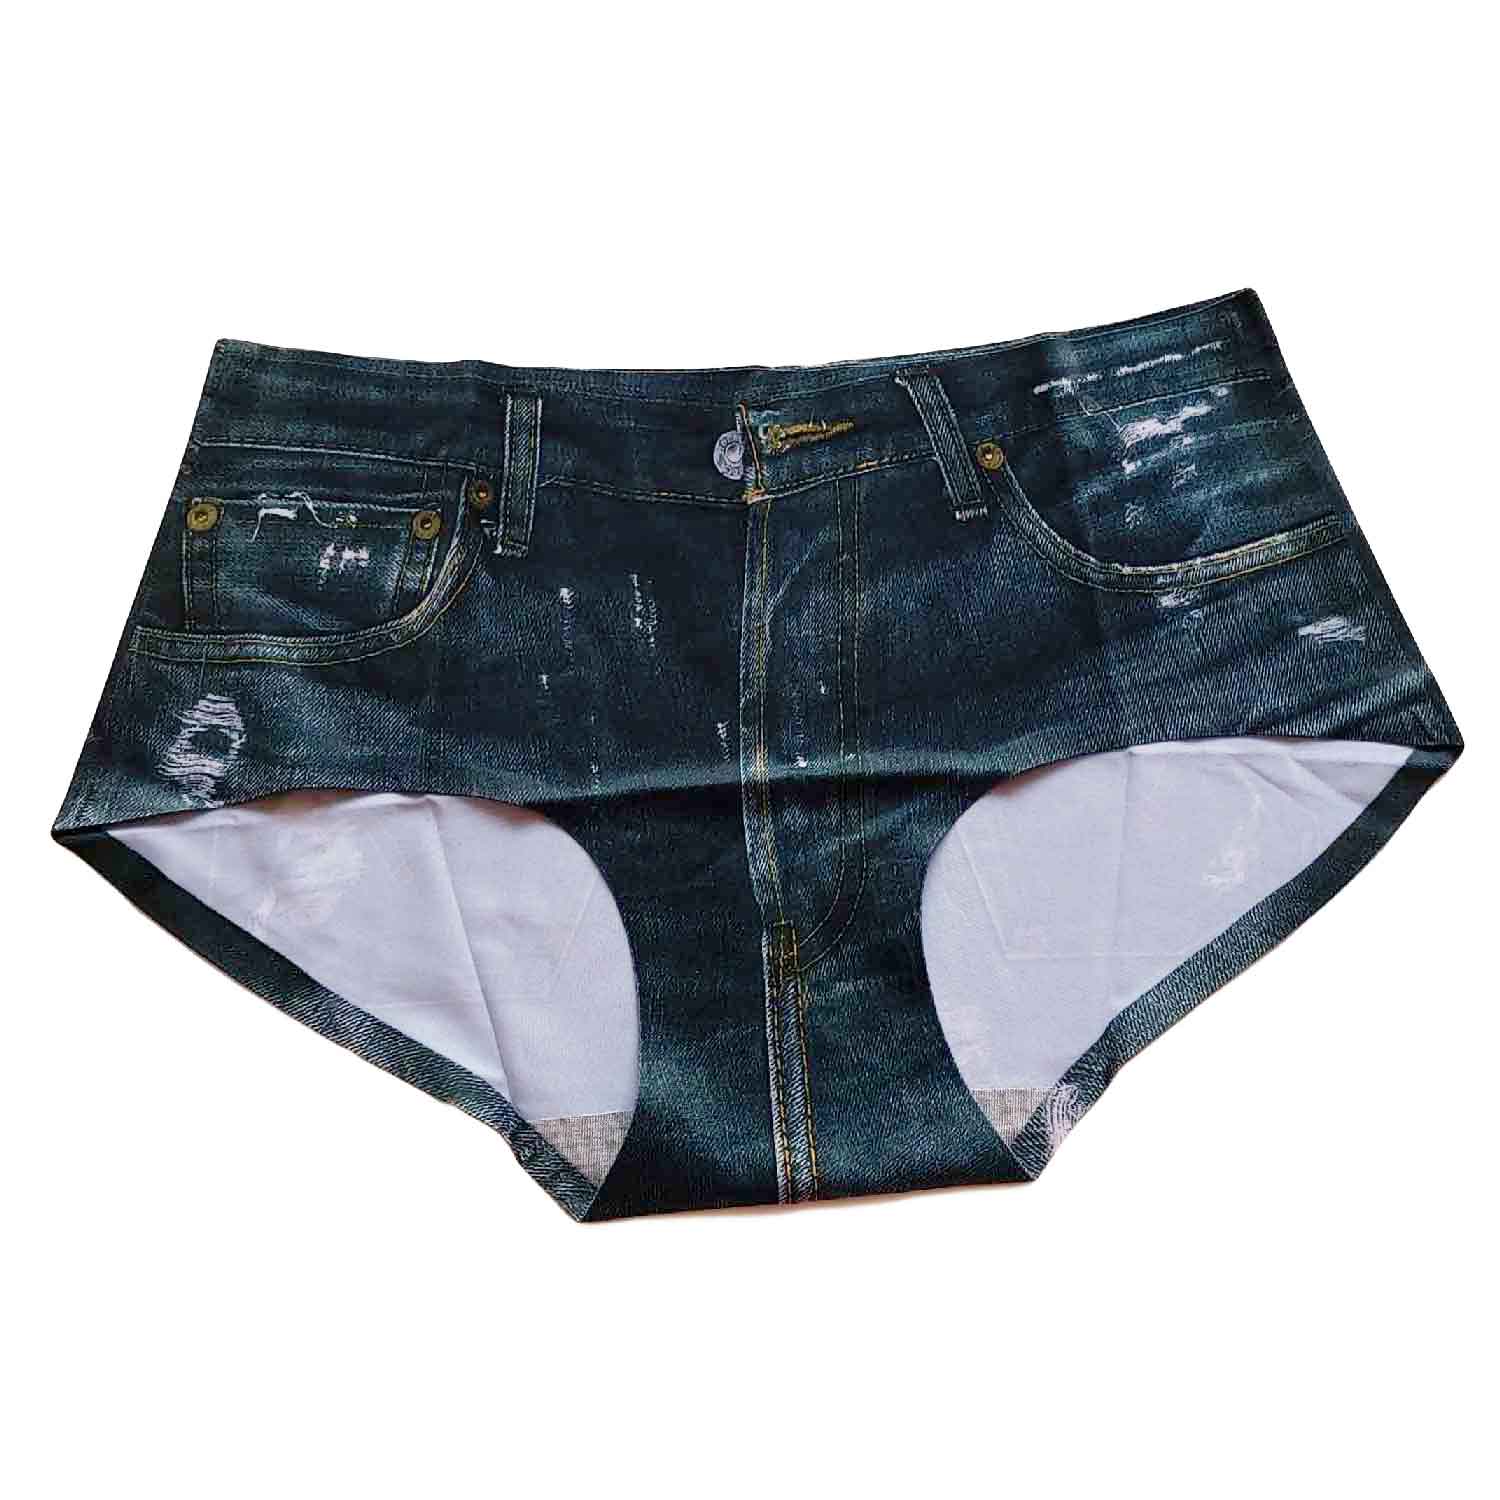 M0277 black1 Panties Slips Underwear Shapewear maureens.com boutique